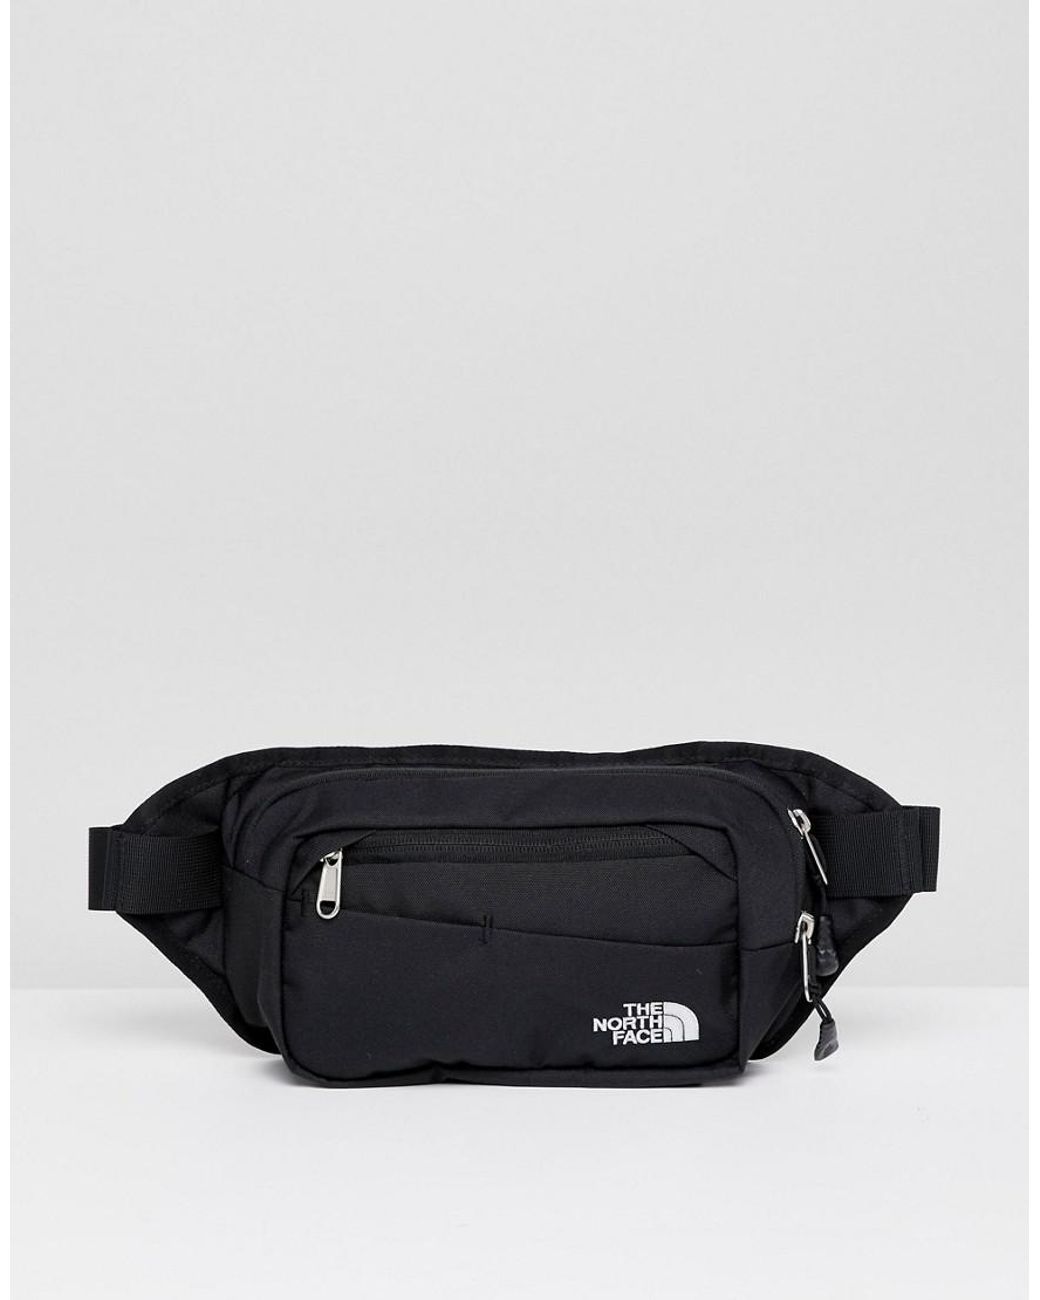 The North Face Bozer Hip Pack Ii Bum Bag In Black | Lyst